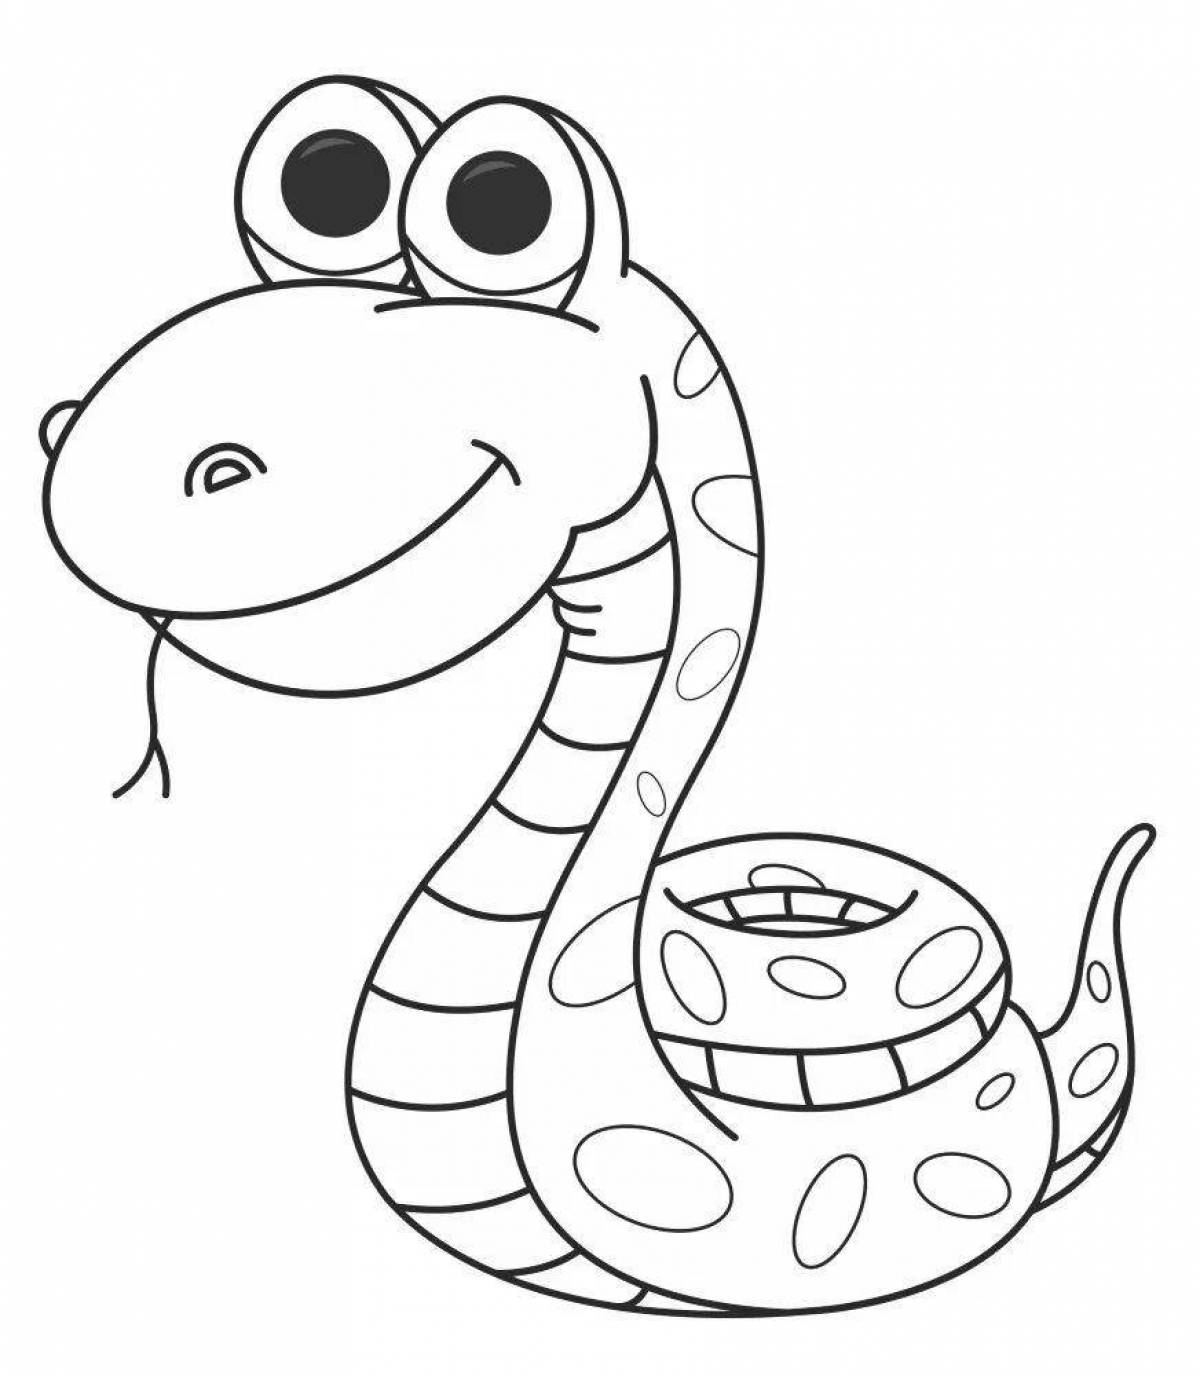 Fancy snake coloring for kids